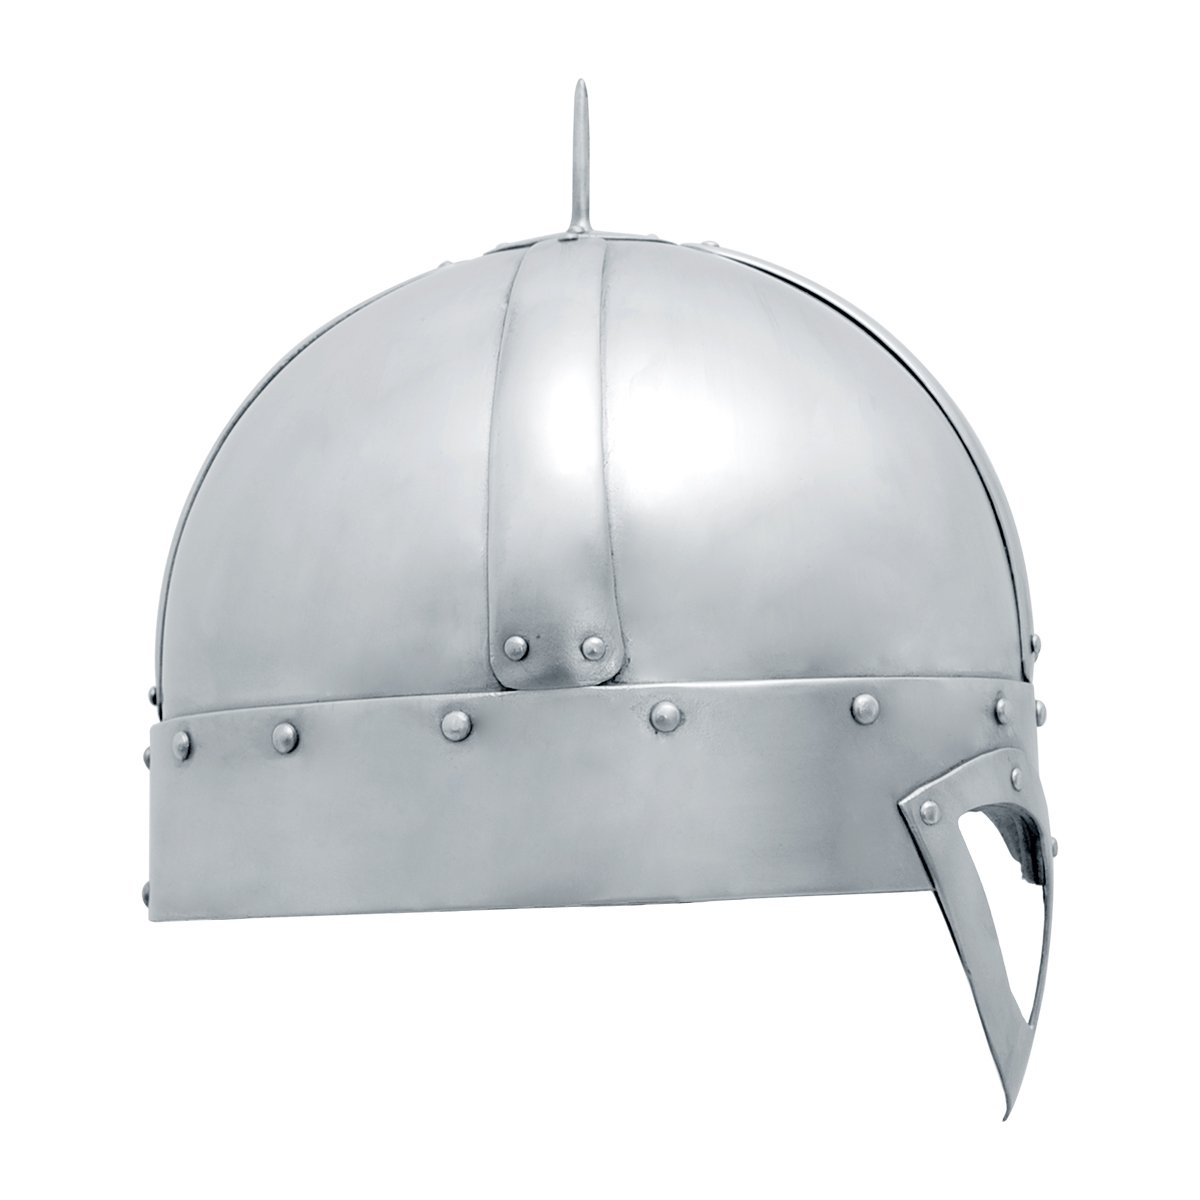 The Gjermundbu helmet, Size XL